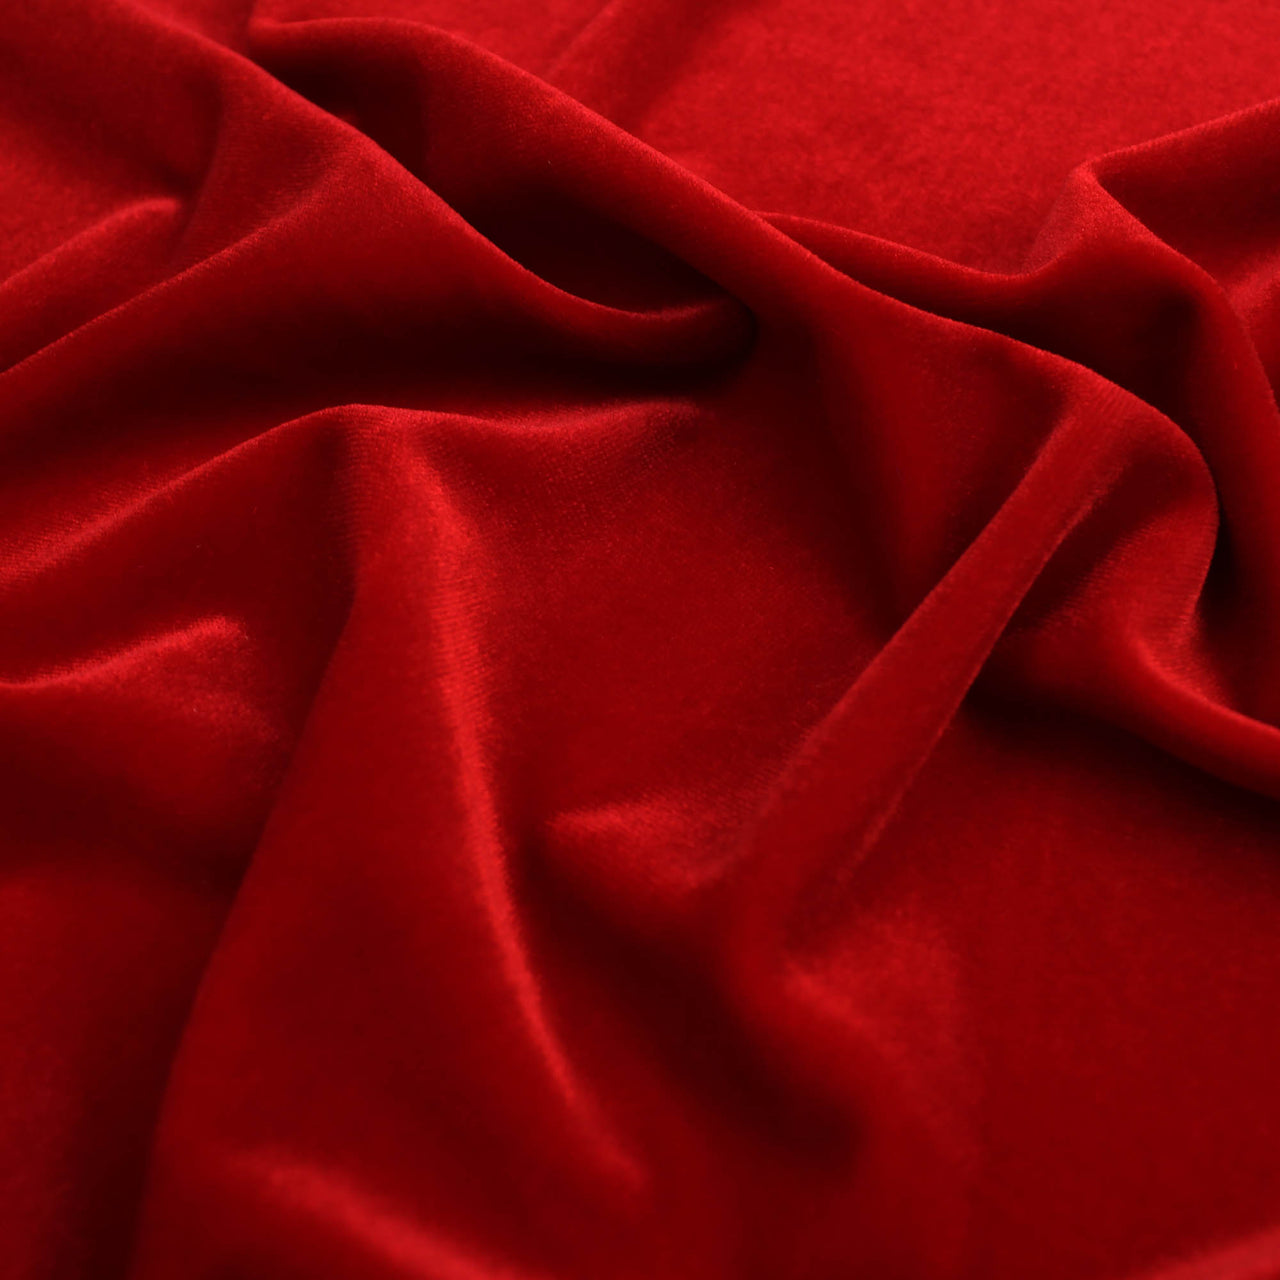 Red - Spandex Velvet Fabric (4 Way Stretch) - Superior Quality for Dance & Leotards